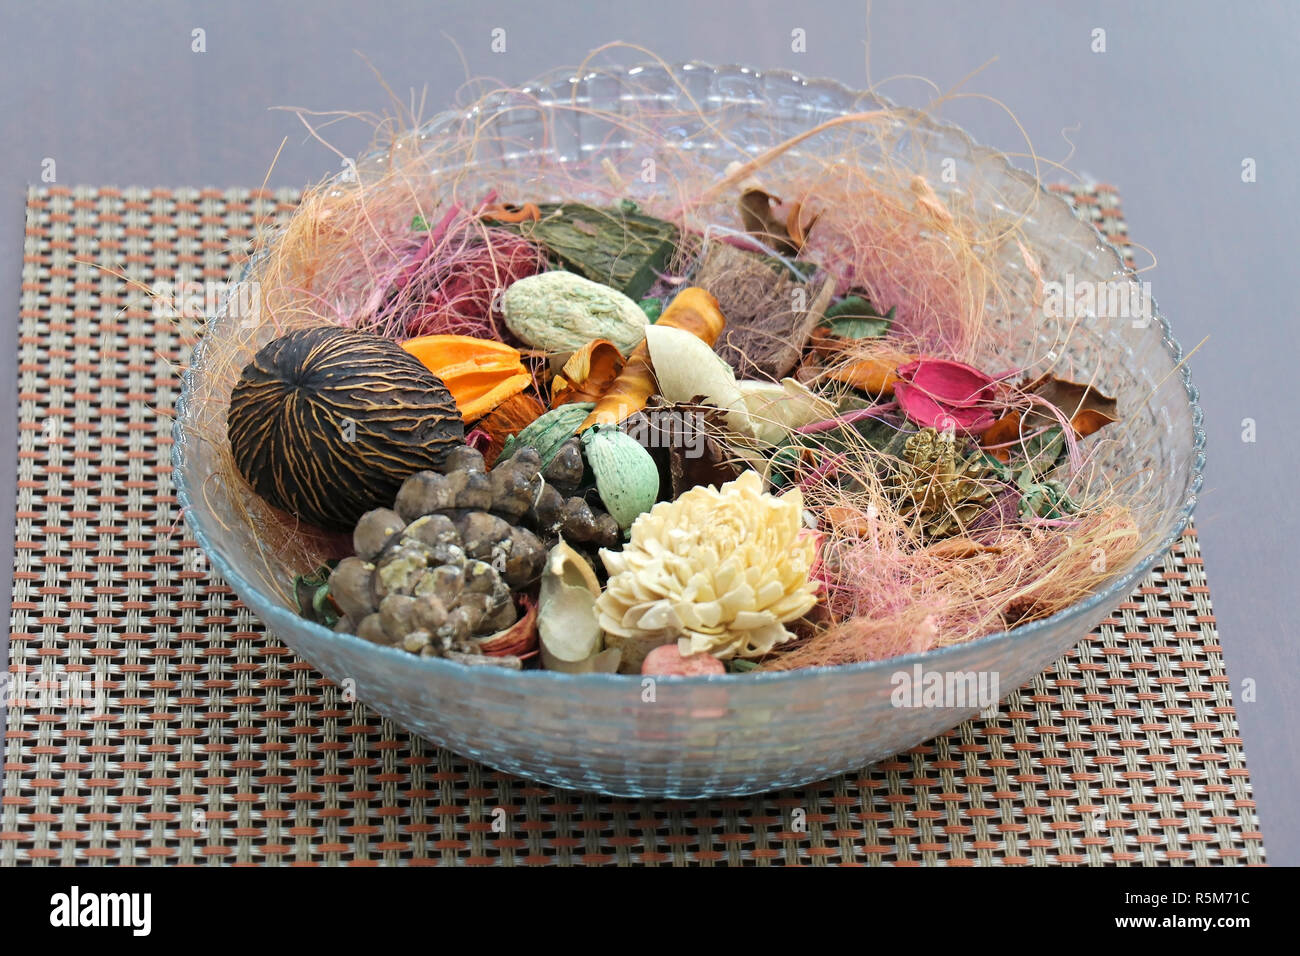 https://c8.alamy.com/comp/R5M71C/pile-of-colorful-potpourri-in-glass-bowl-as-home-decor-R5M71C.jpg